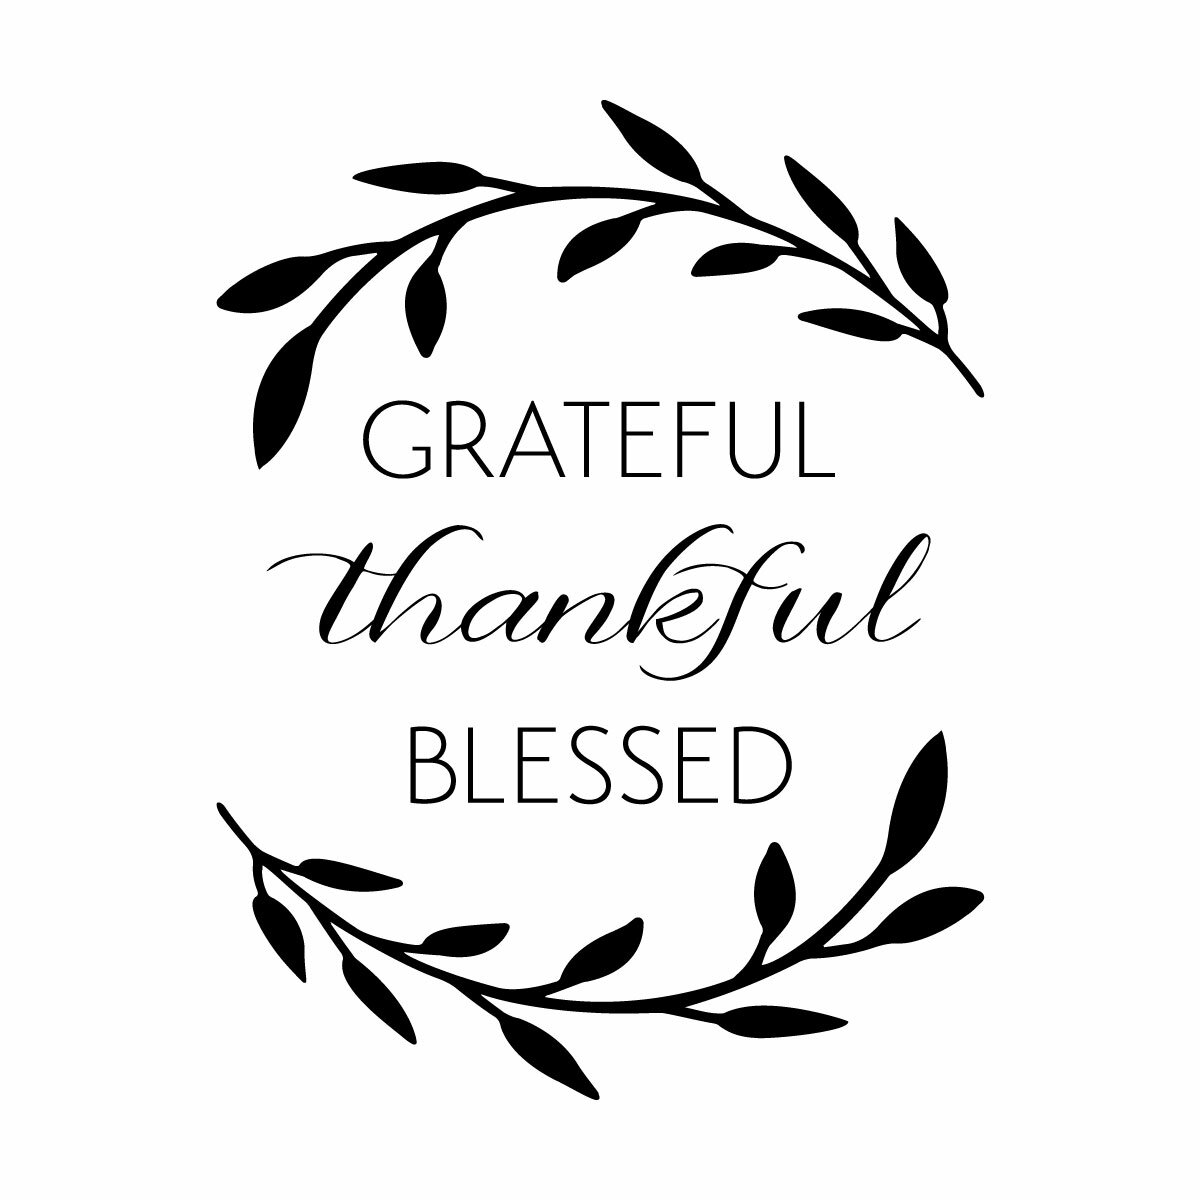 Blessed Grateful Thankful